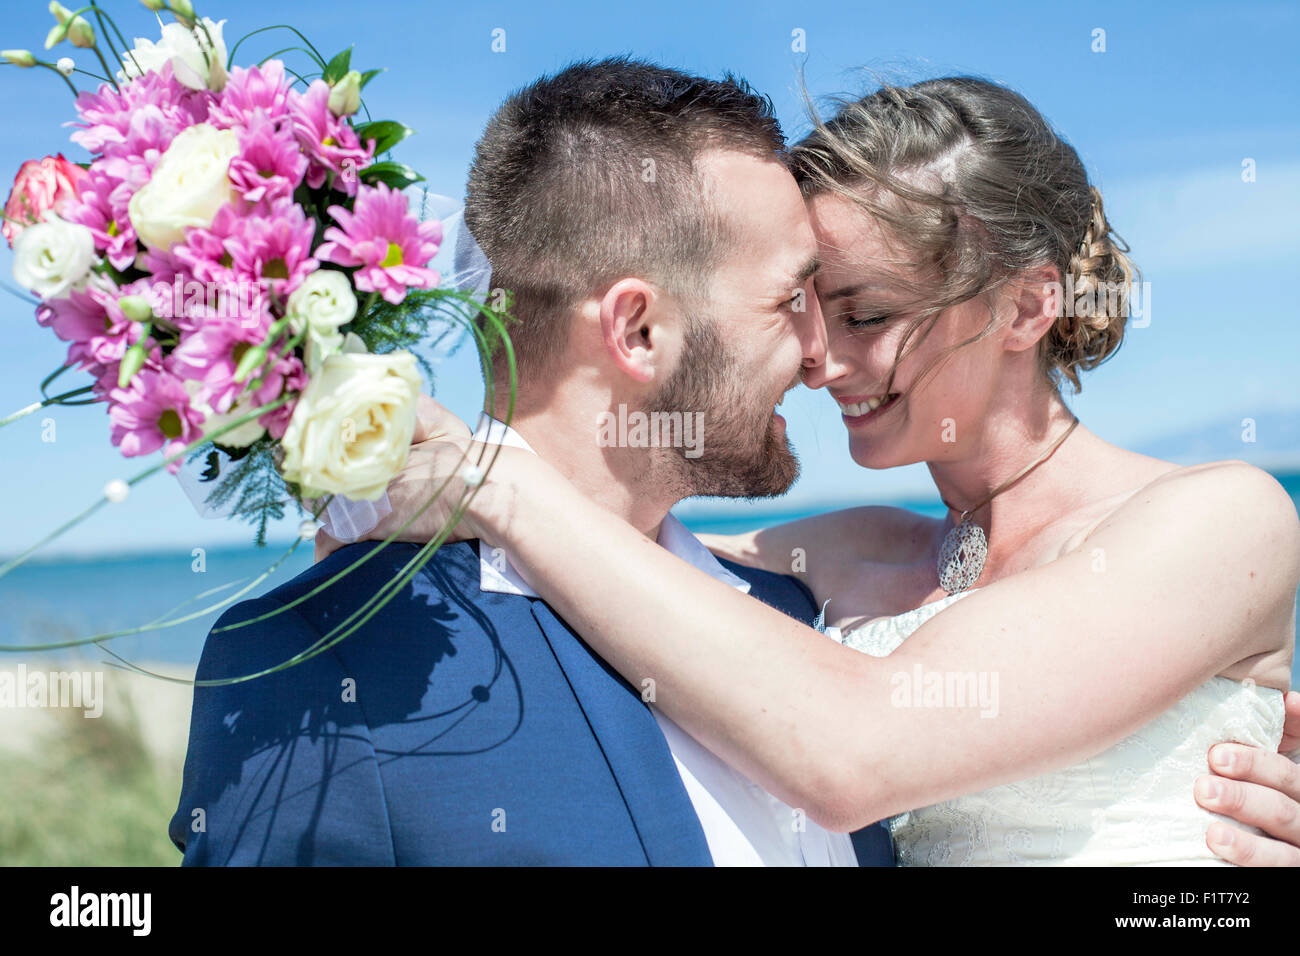 Bride and bridegroom embracing happily Stock Photo